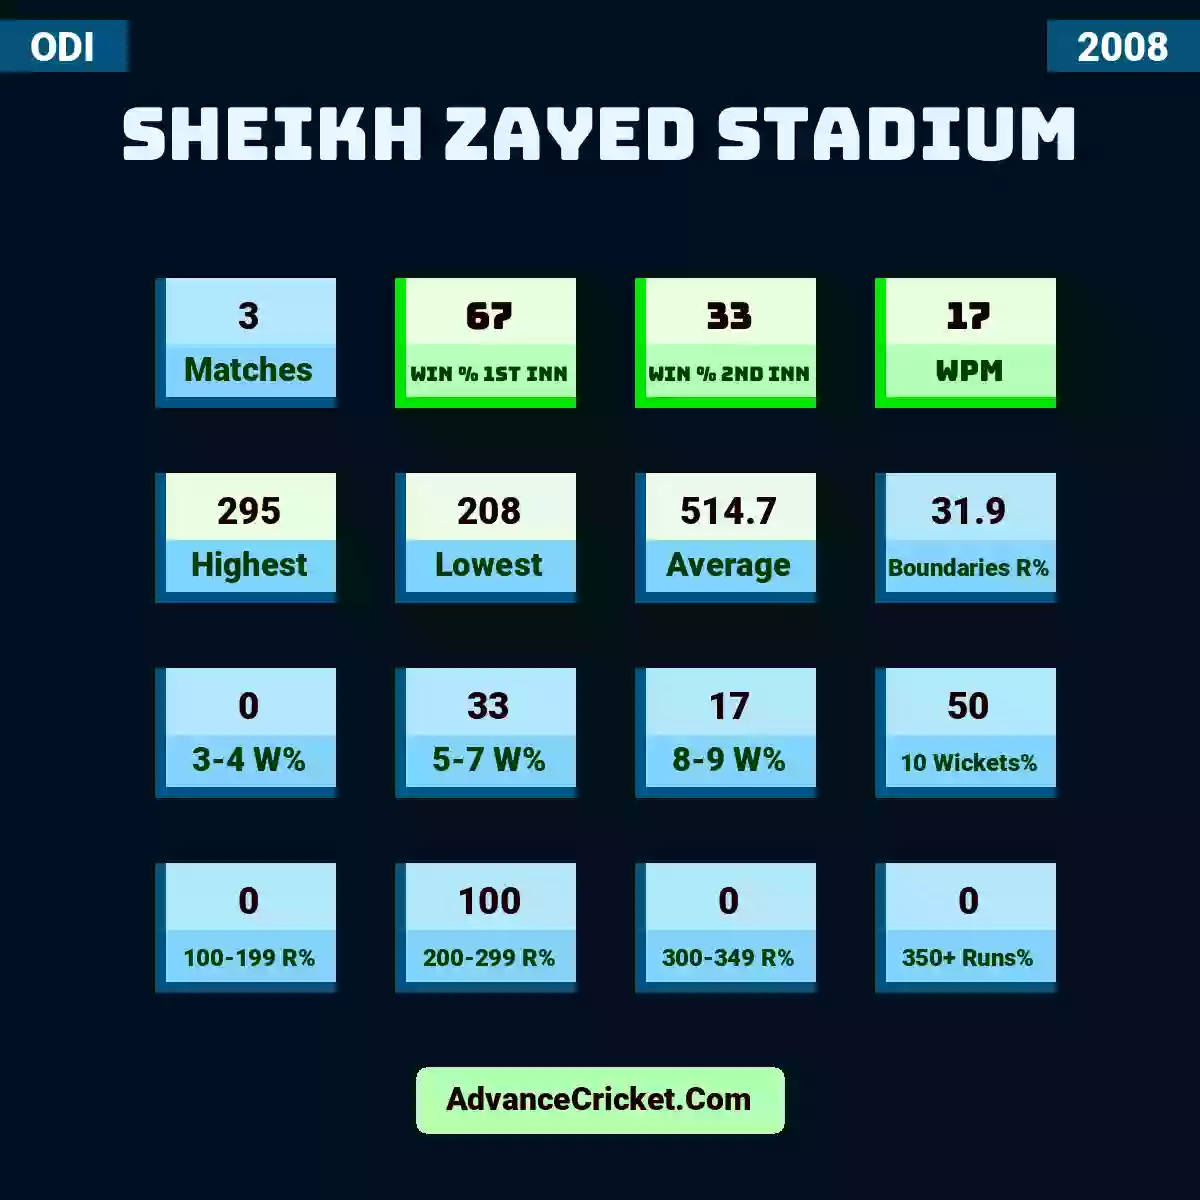 Image showing Sheikh Zayed Stadium with Matches: 3, Win % 1st Inn: 67, Win % 2nd Inn: 33, WPM: 17, Highest: 295, Lowest: 208, Average: 514.7, Boundaries R%: 31.9, 3-4 W%: 0, 5-7 W%: 33, 8-9 W%: 17, 10 Wickets%: 50, 100-199 R%: 0, 200-299 R%: 100, 300-349 R%: 0, 350+ Runs%: 0.